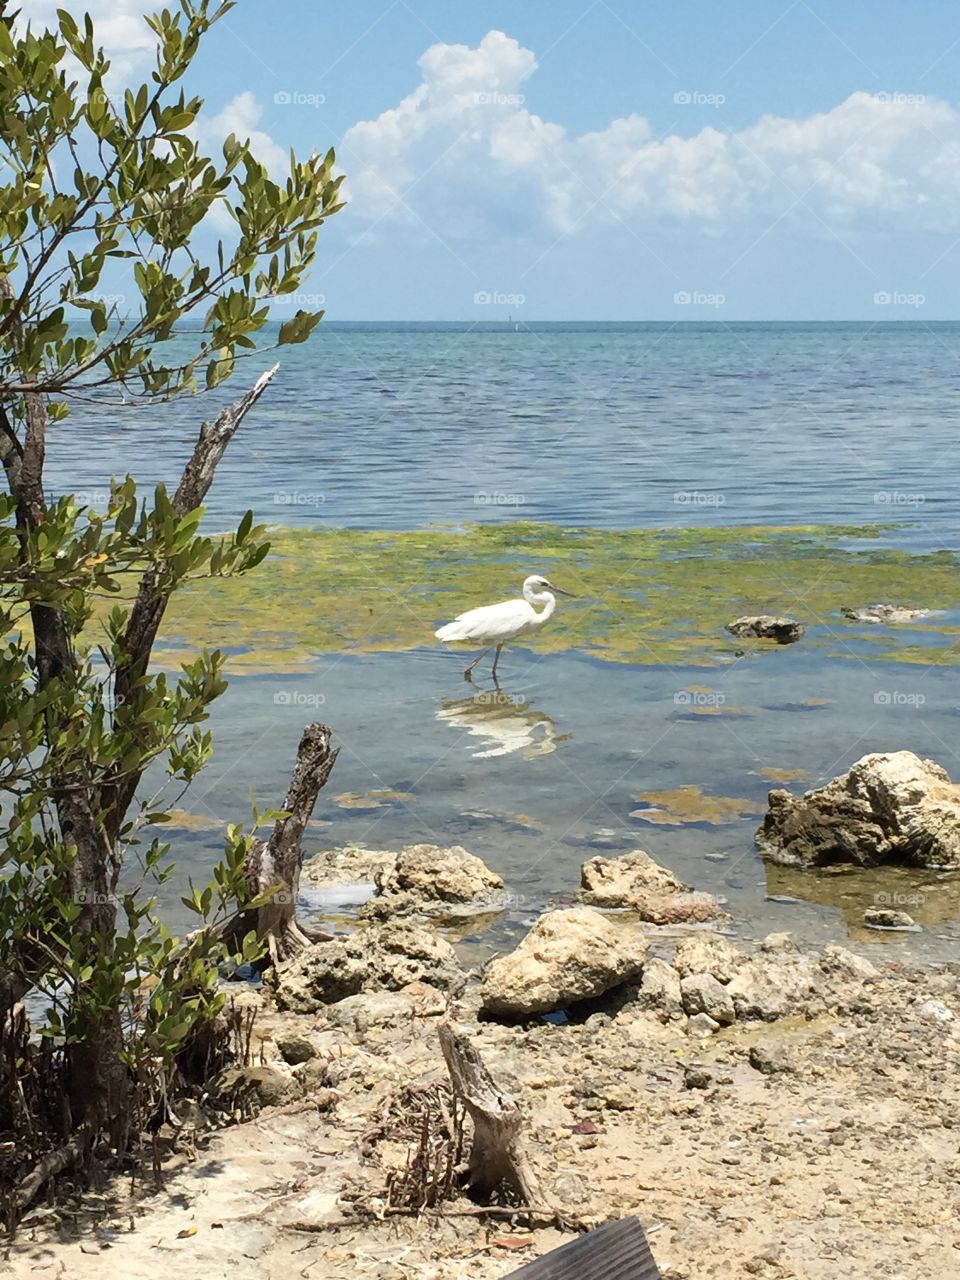 A little egret hunting in the Florida Keys.  